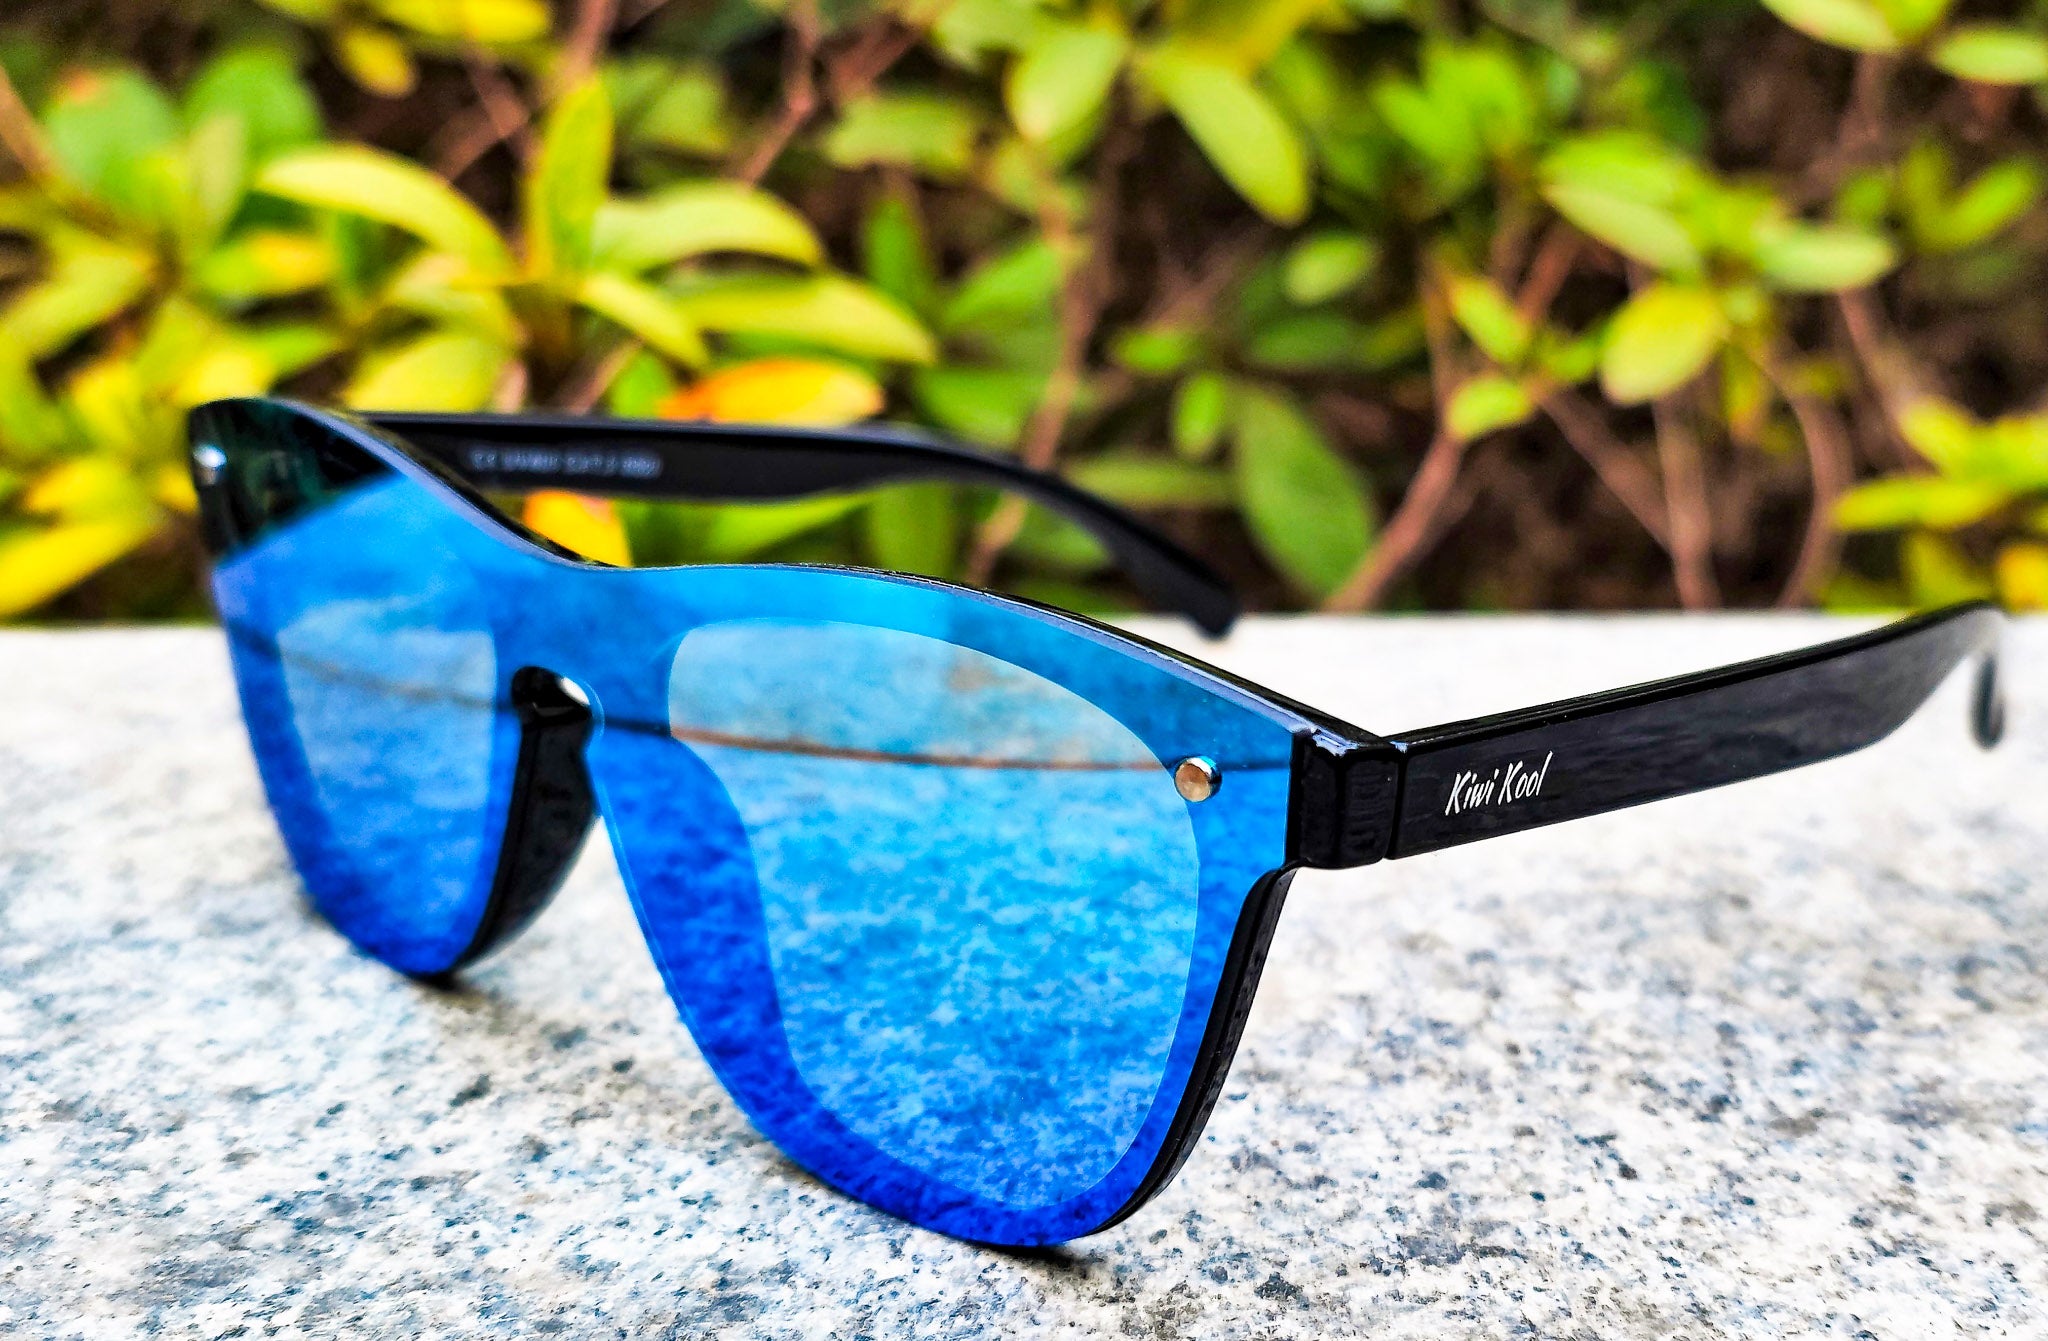 Key West unisex Mirrored Rimless Sunglasses- Vaporwave Futuristic Sunglasses with Blue Mirror Lenses